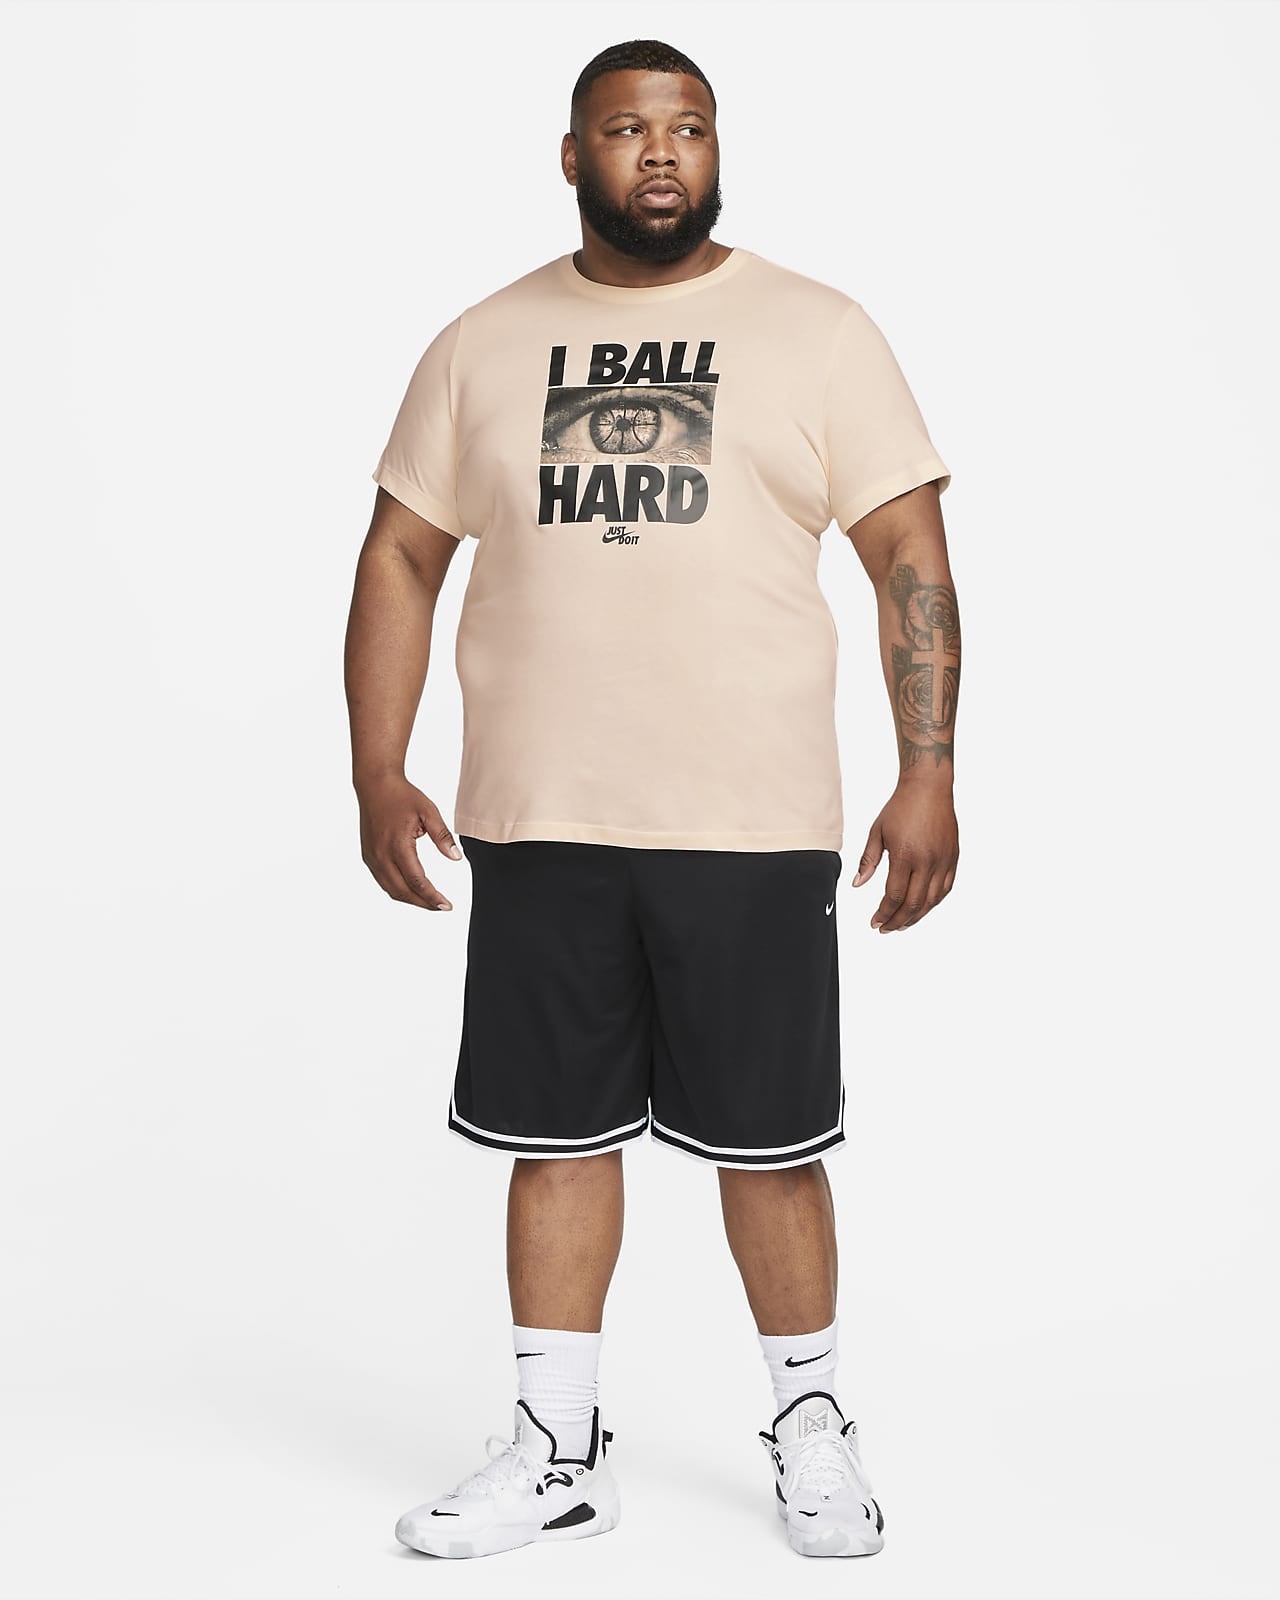 Nike, Shirts, Basketball Shirt